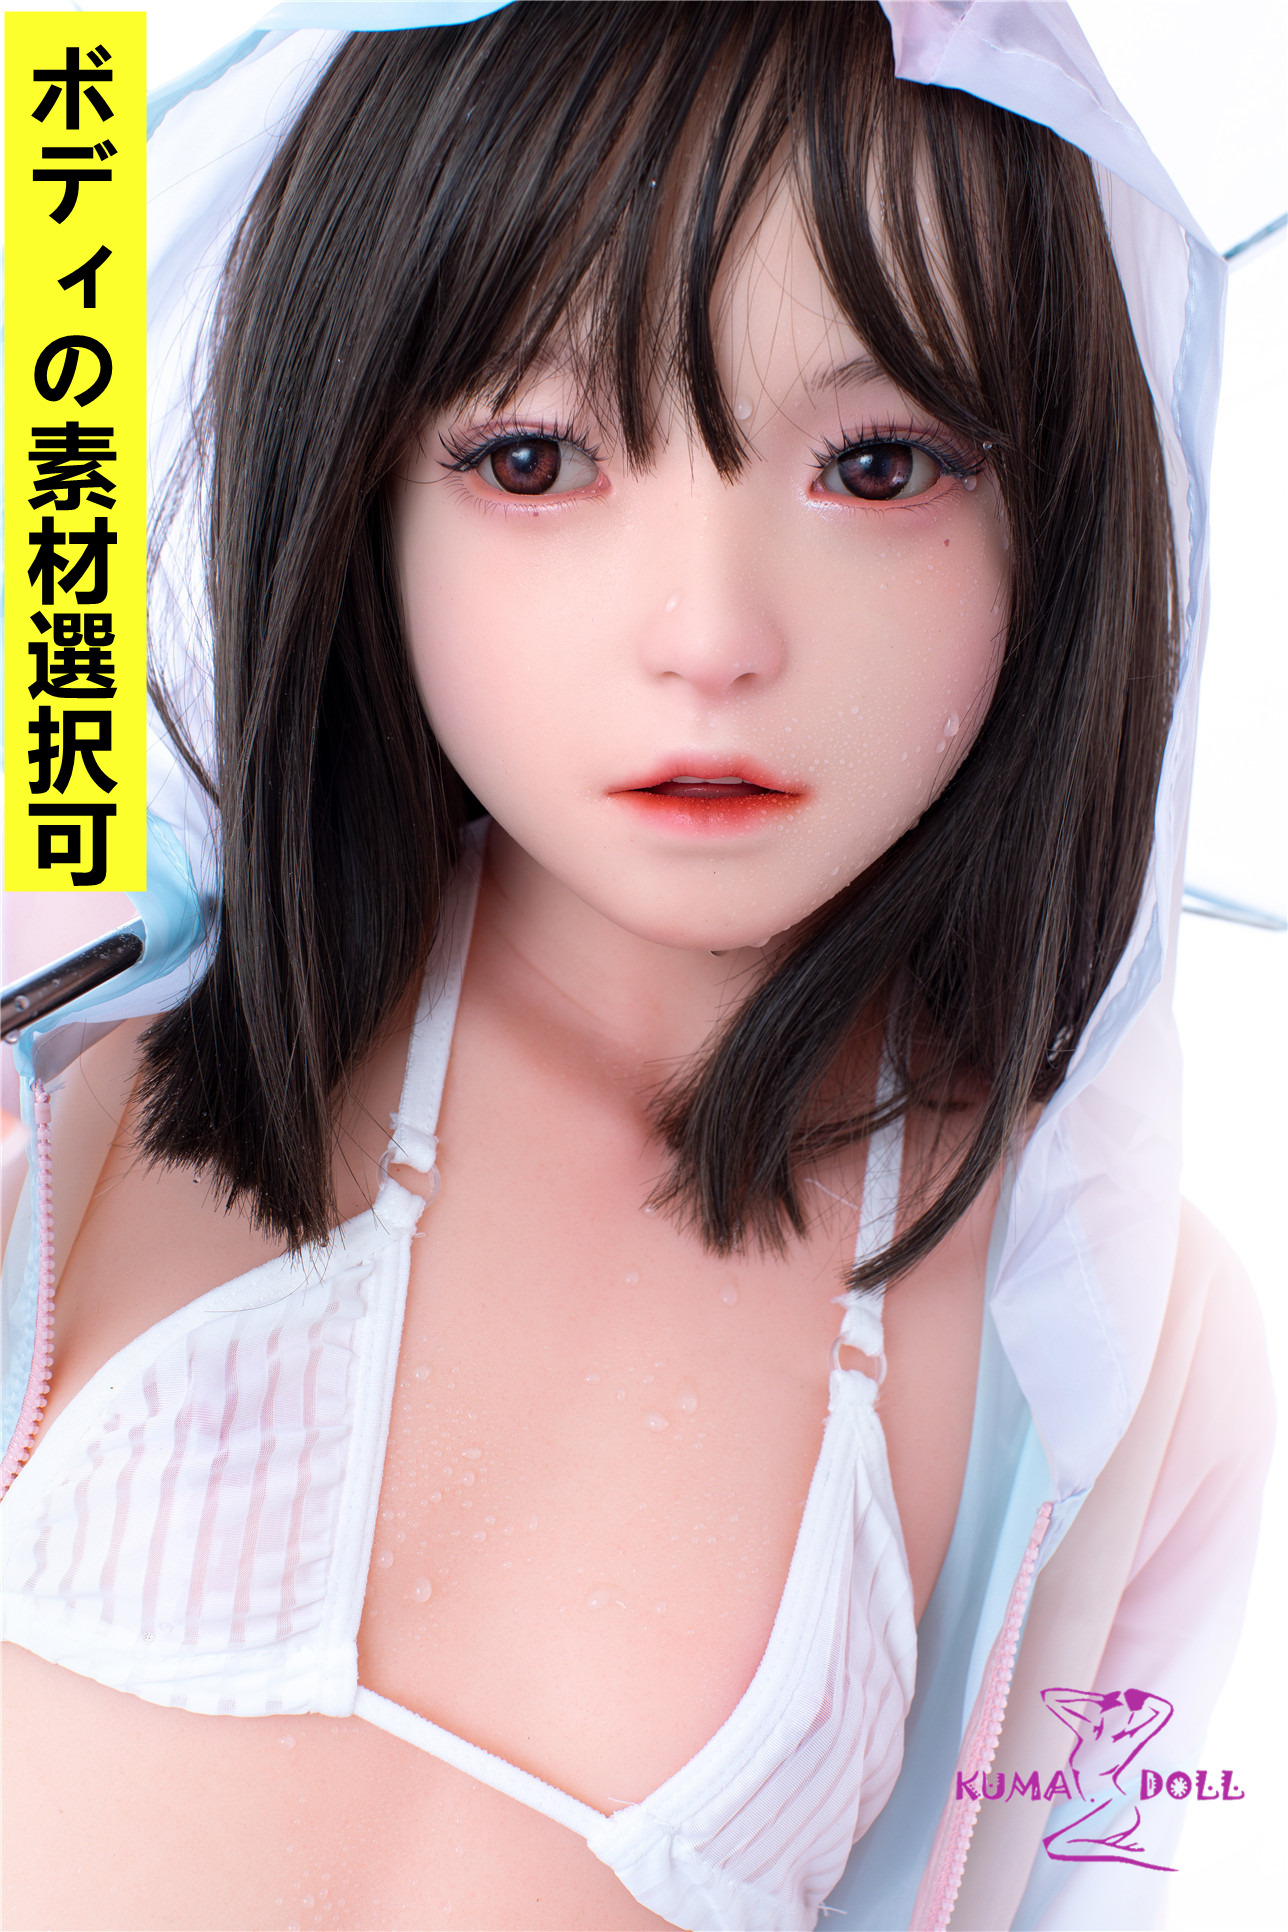 FUDOLL Love Doll #8頭部 Premium Silicone Head Body Material & Height